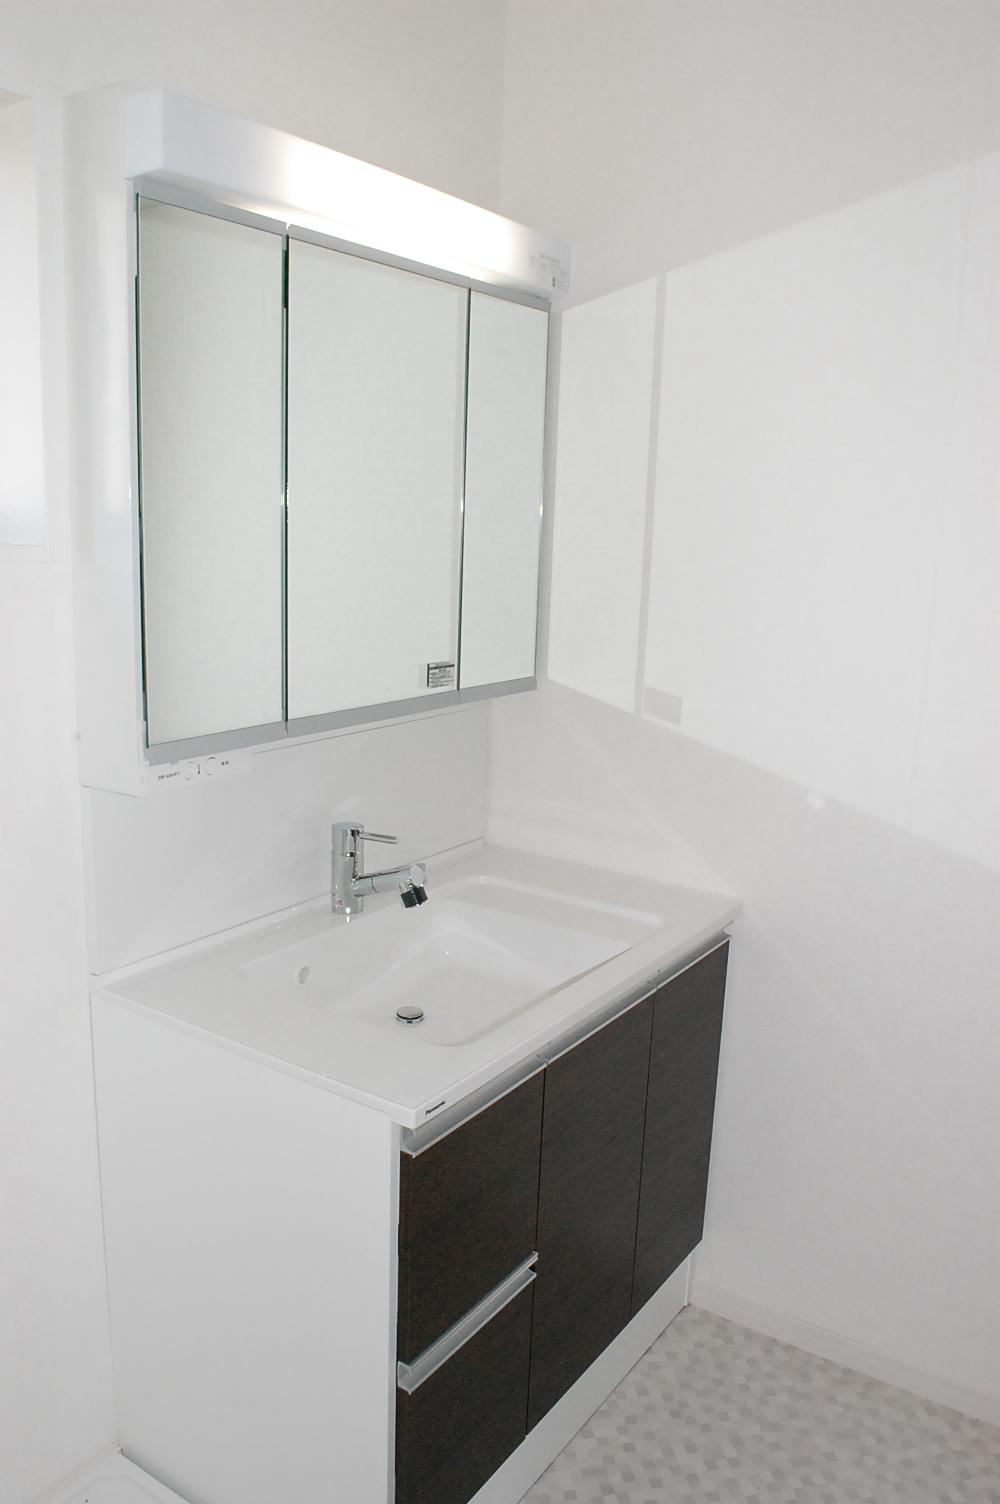 Wash basin, toilet. Panasonic vanity. Shower Faucets. Wide three-sided mirror.